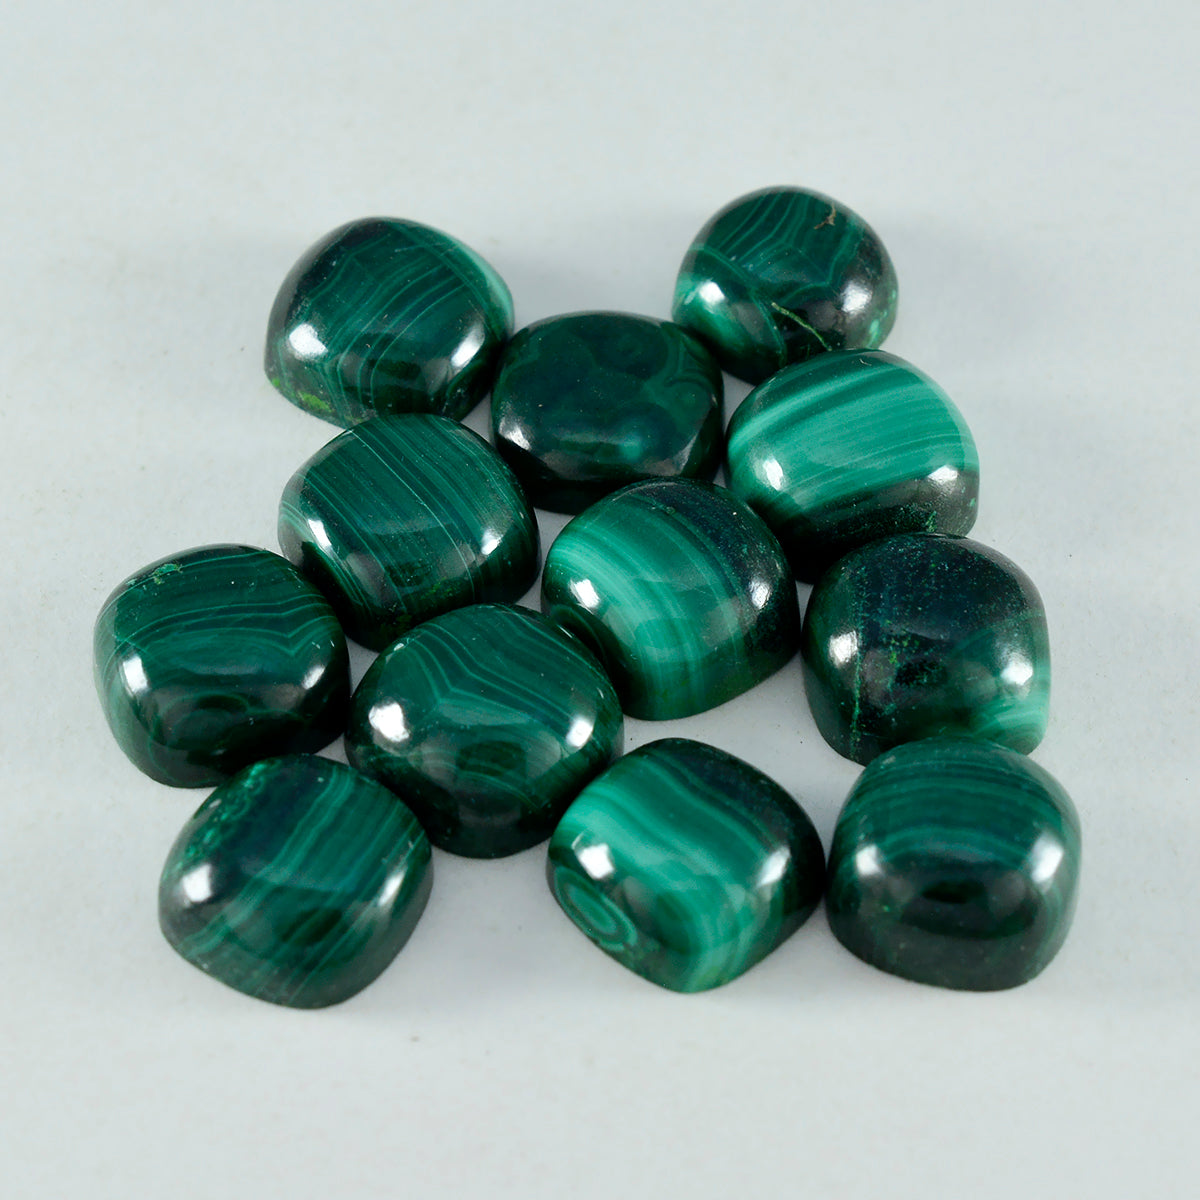 riyogems 1pc グリーン マラカイト カボション 5x5 mm クッション形状の驚くべき品質の宝石